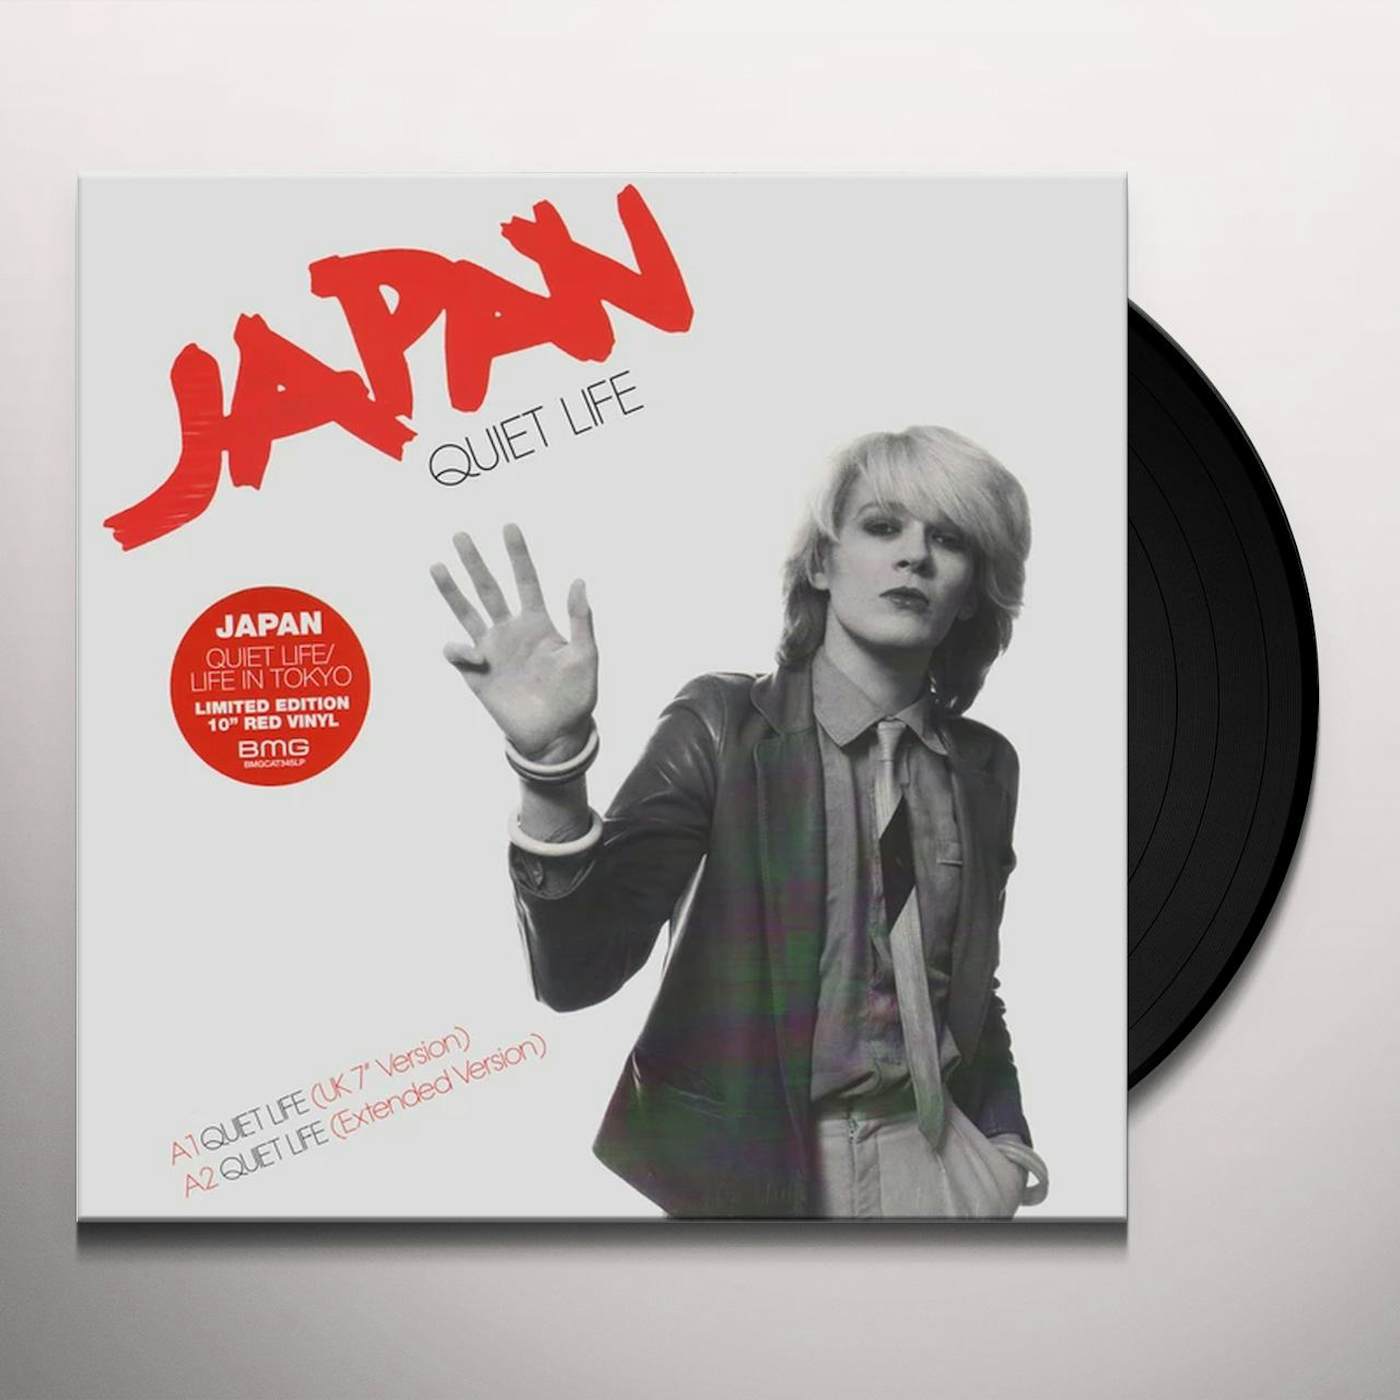 Japan Quiet Life / Life In Tokyo Vinyl Record